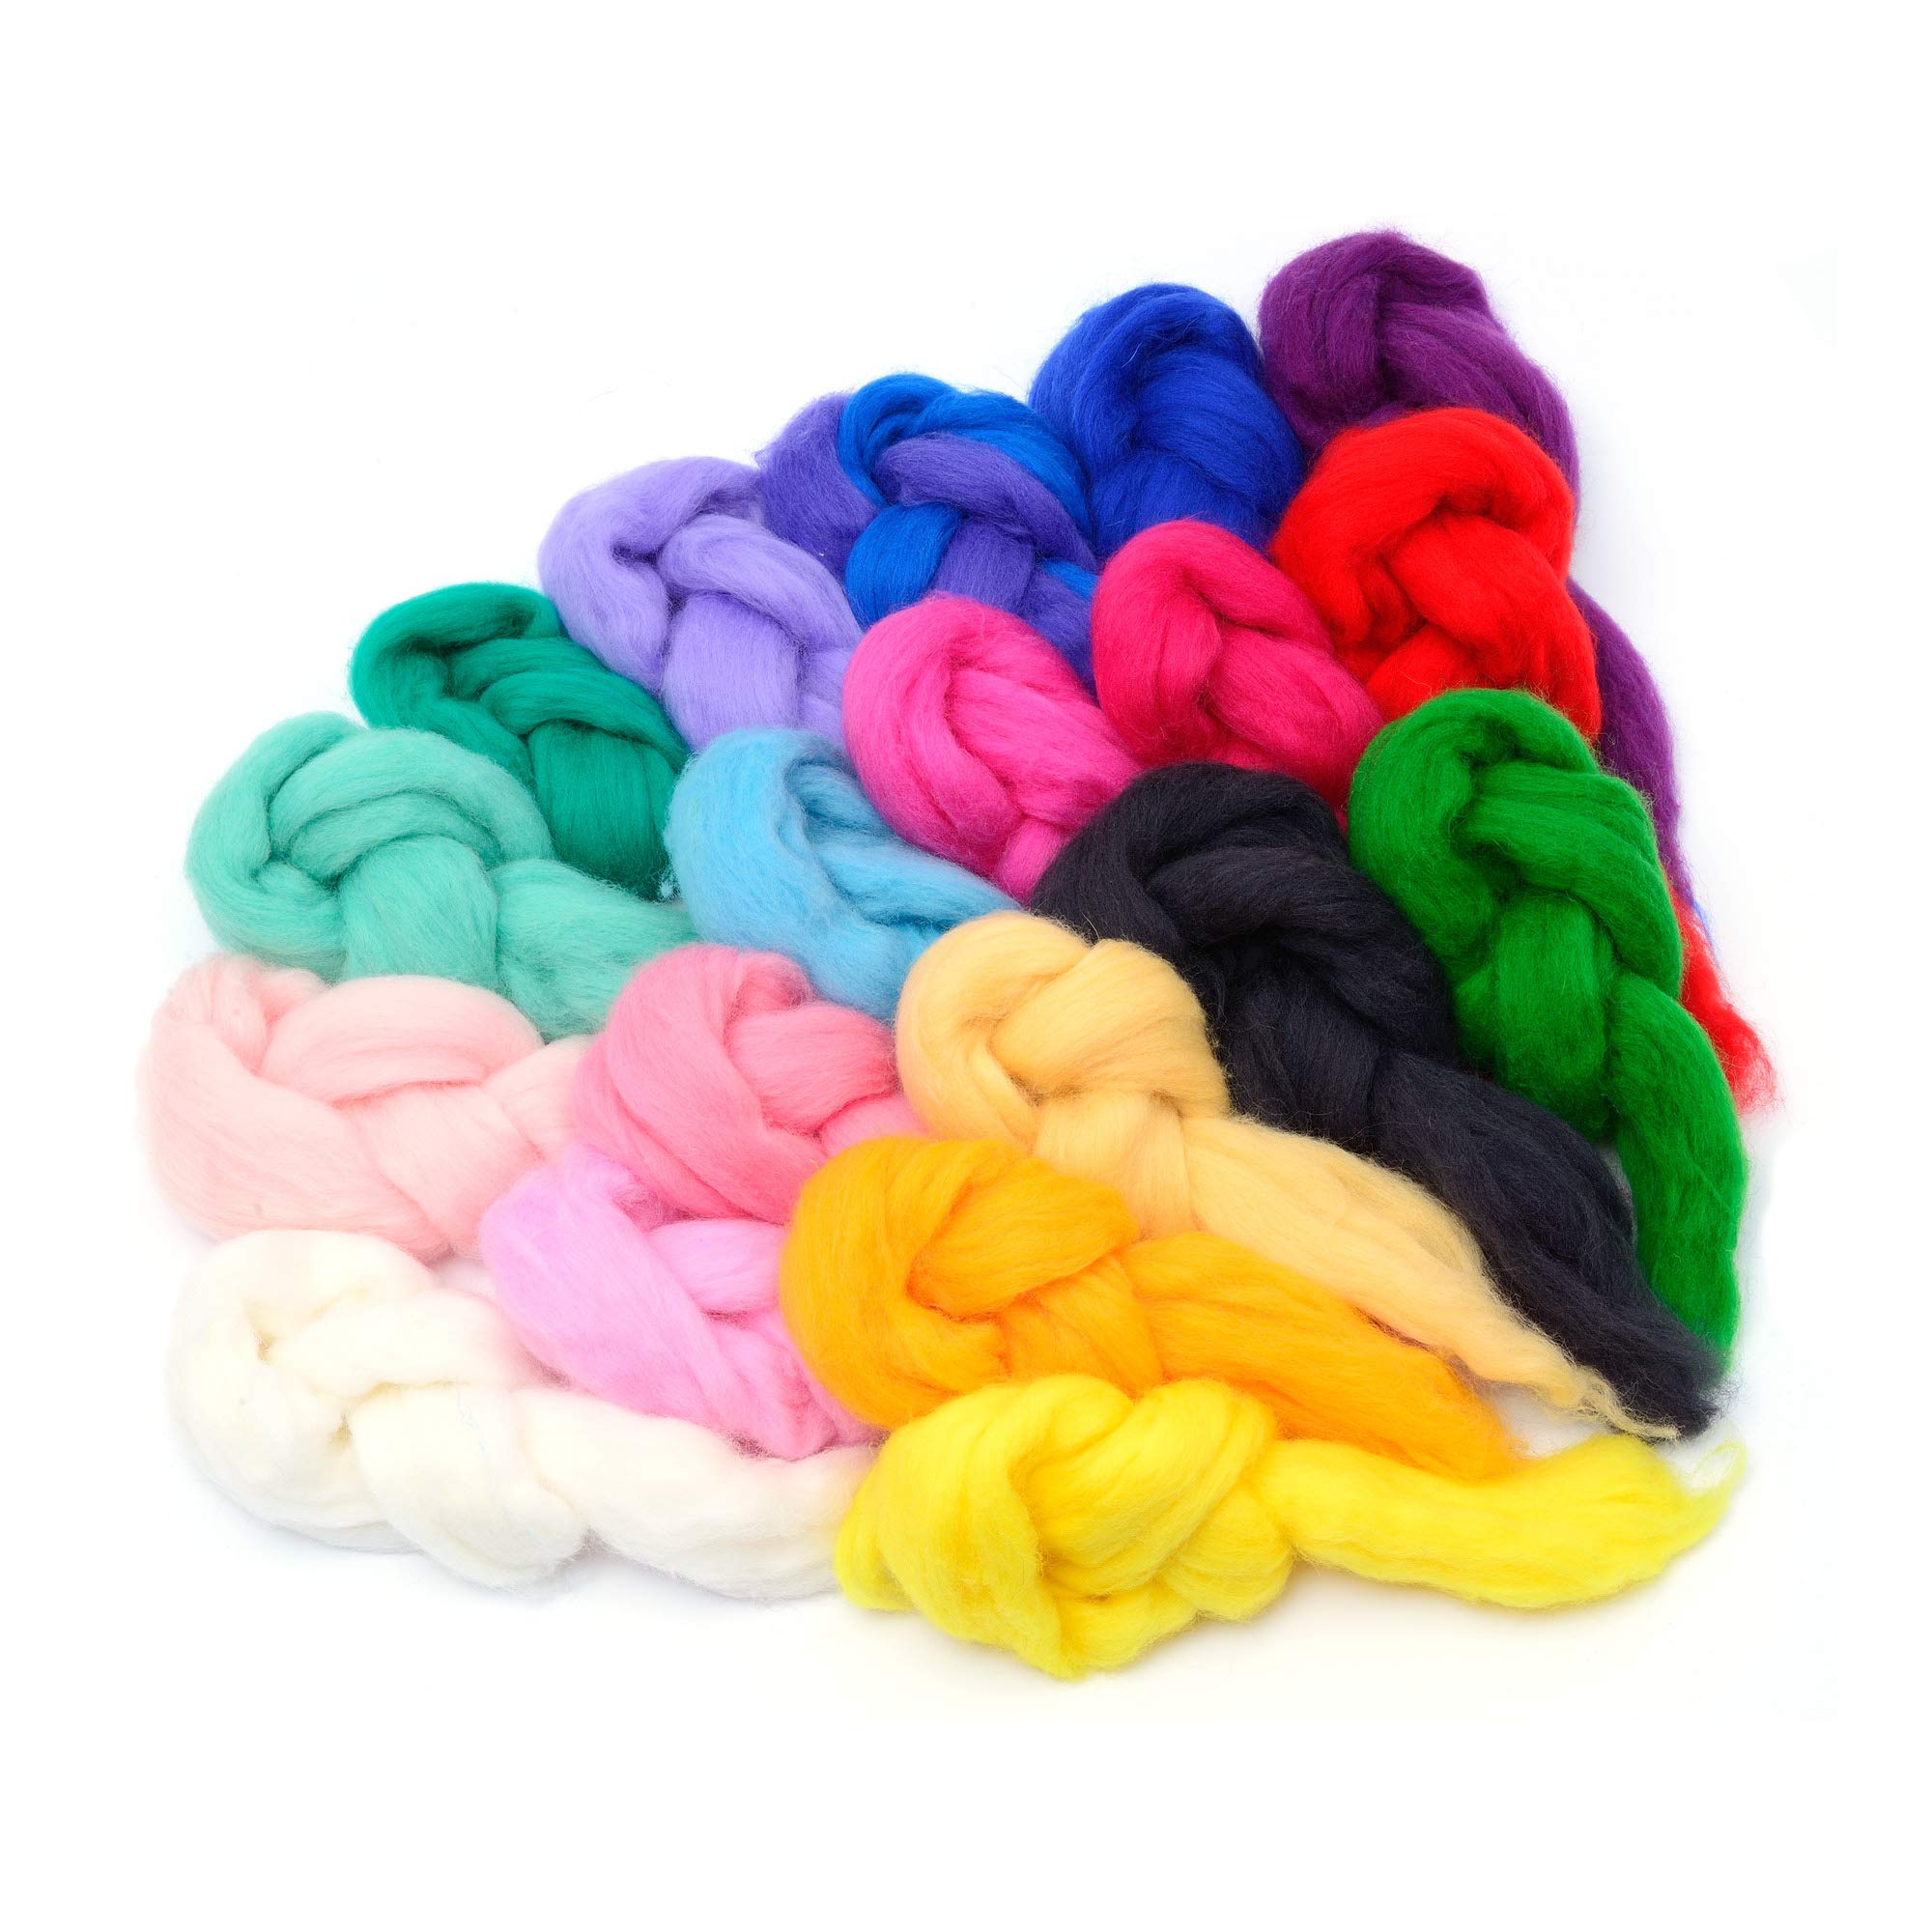 Glaciart One Spinning Fiber Merino Wool - Super Soft 20 Colors